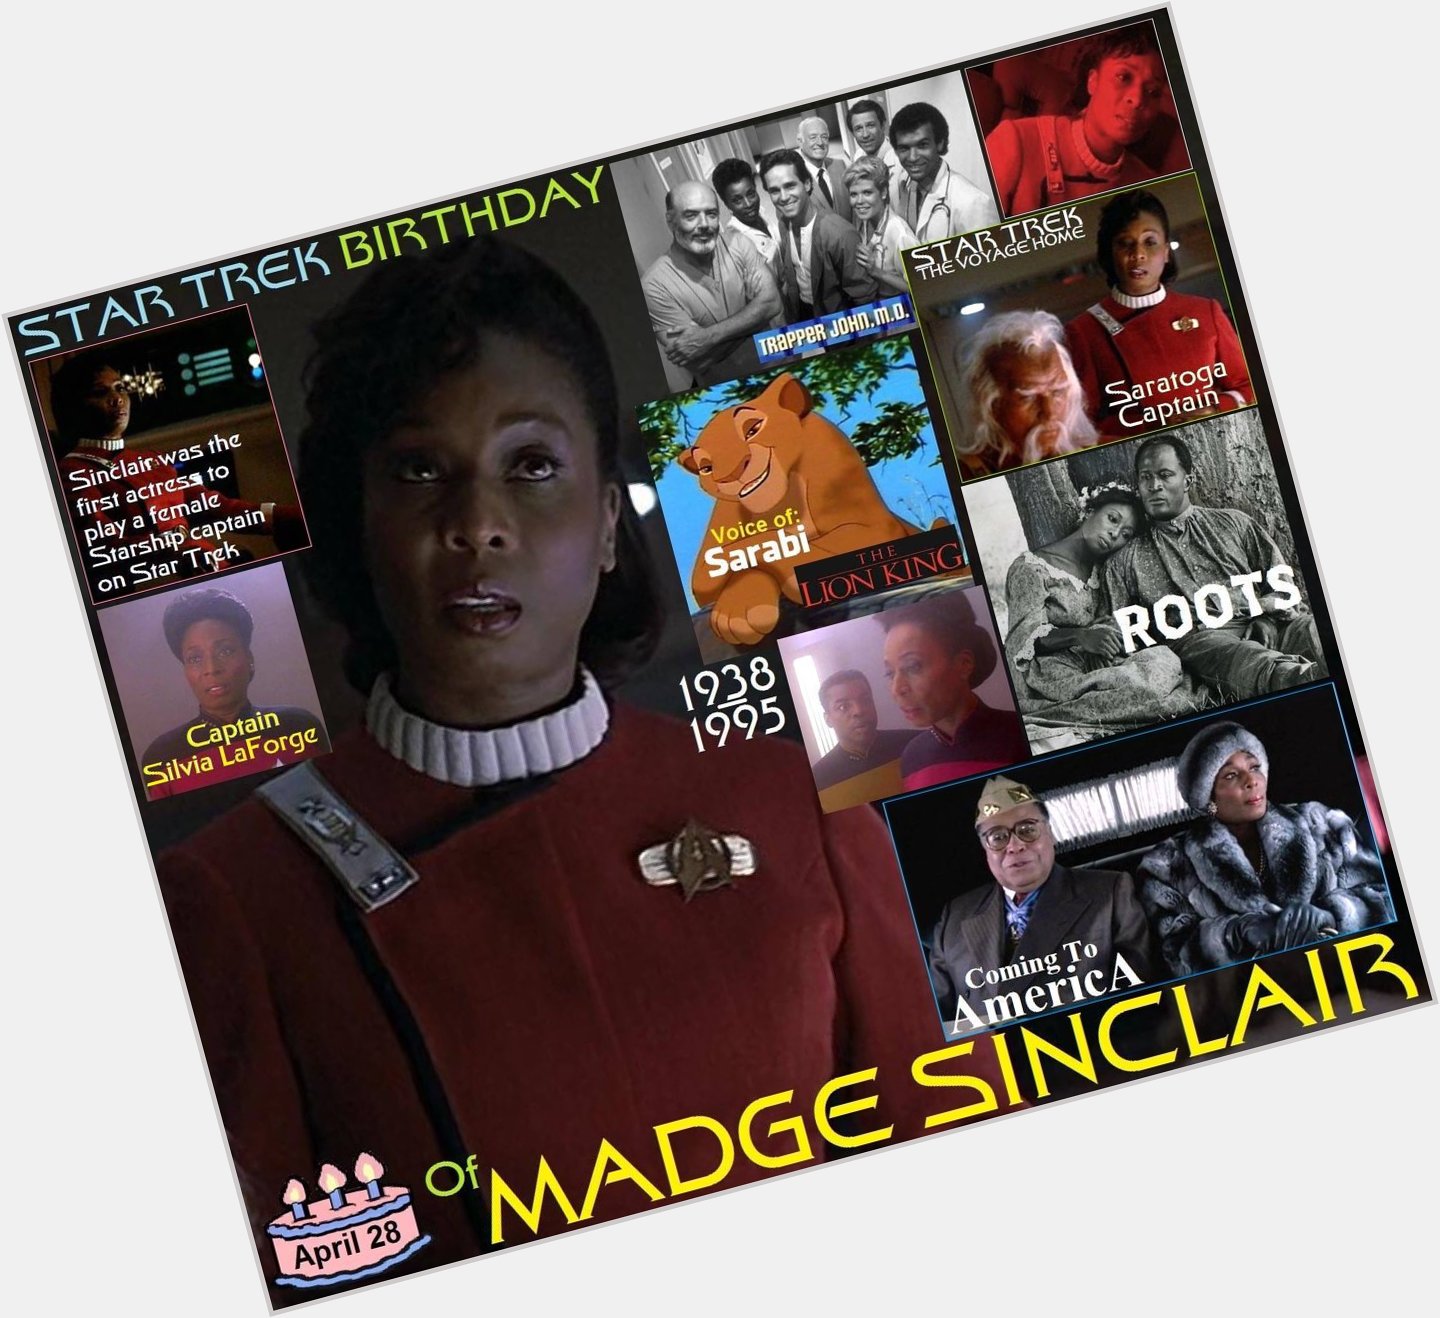  Happy birthday Madge Sinclair aka Captain Silvia LaForge. 